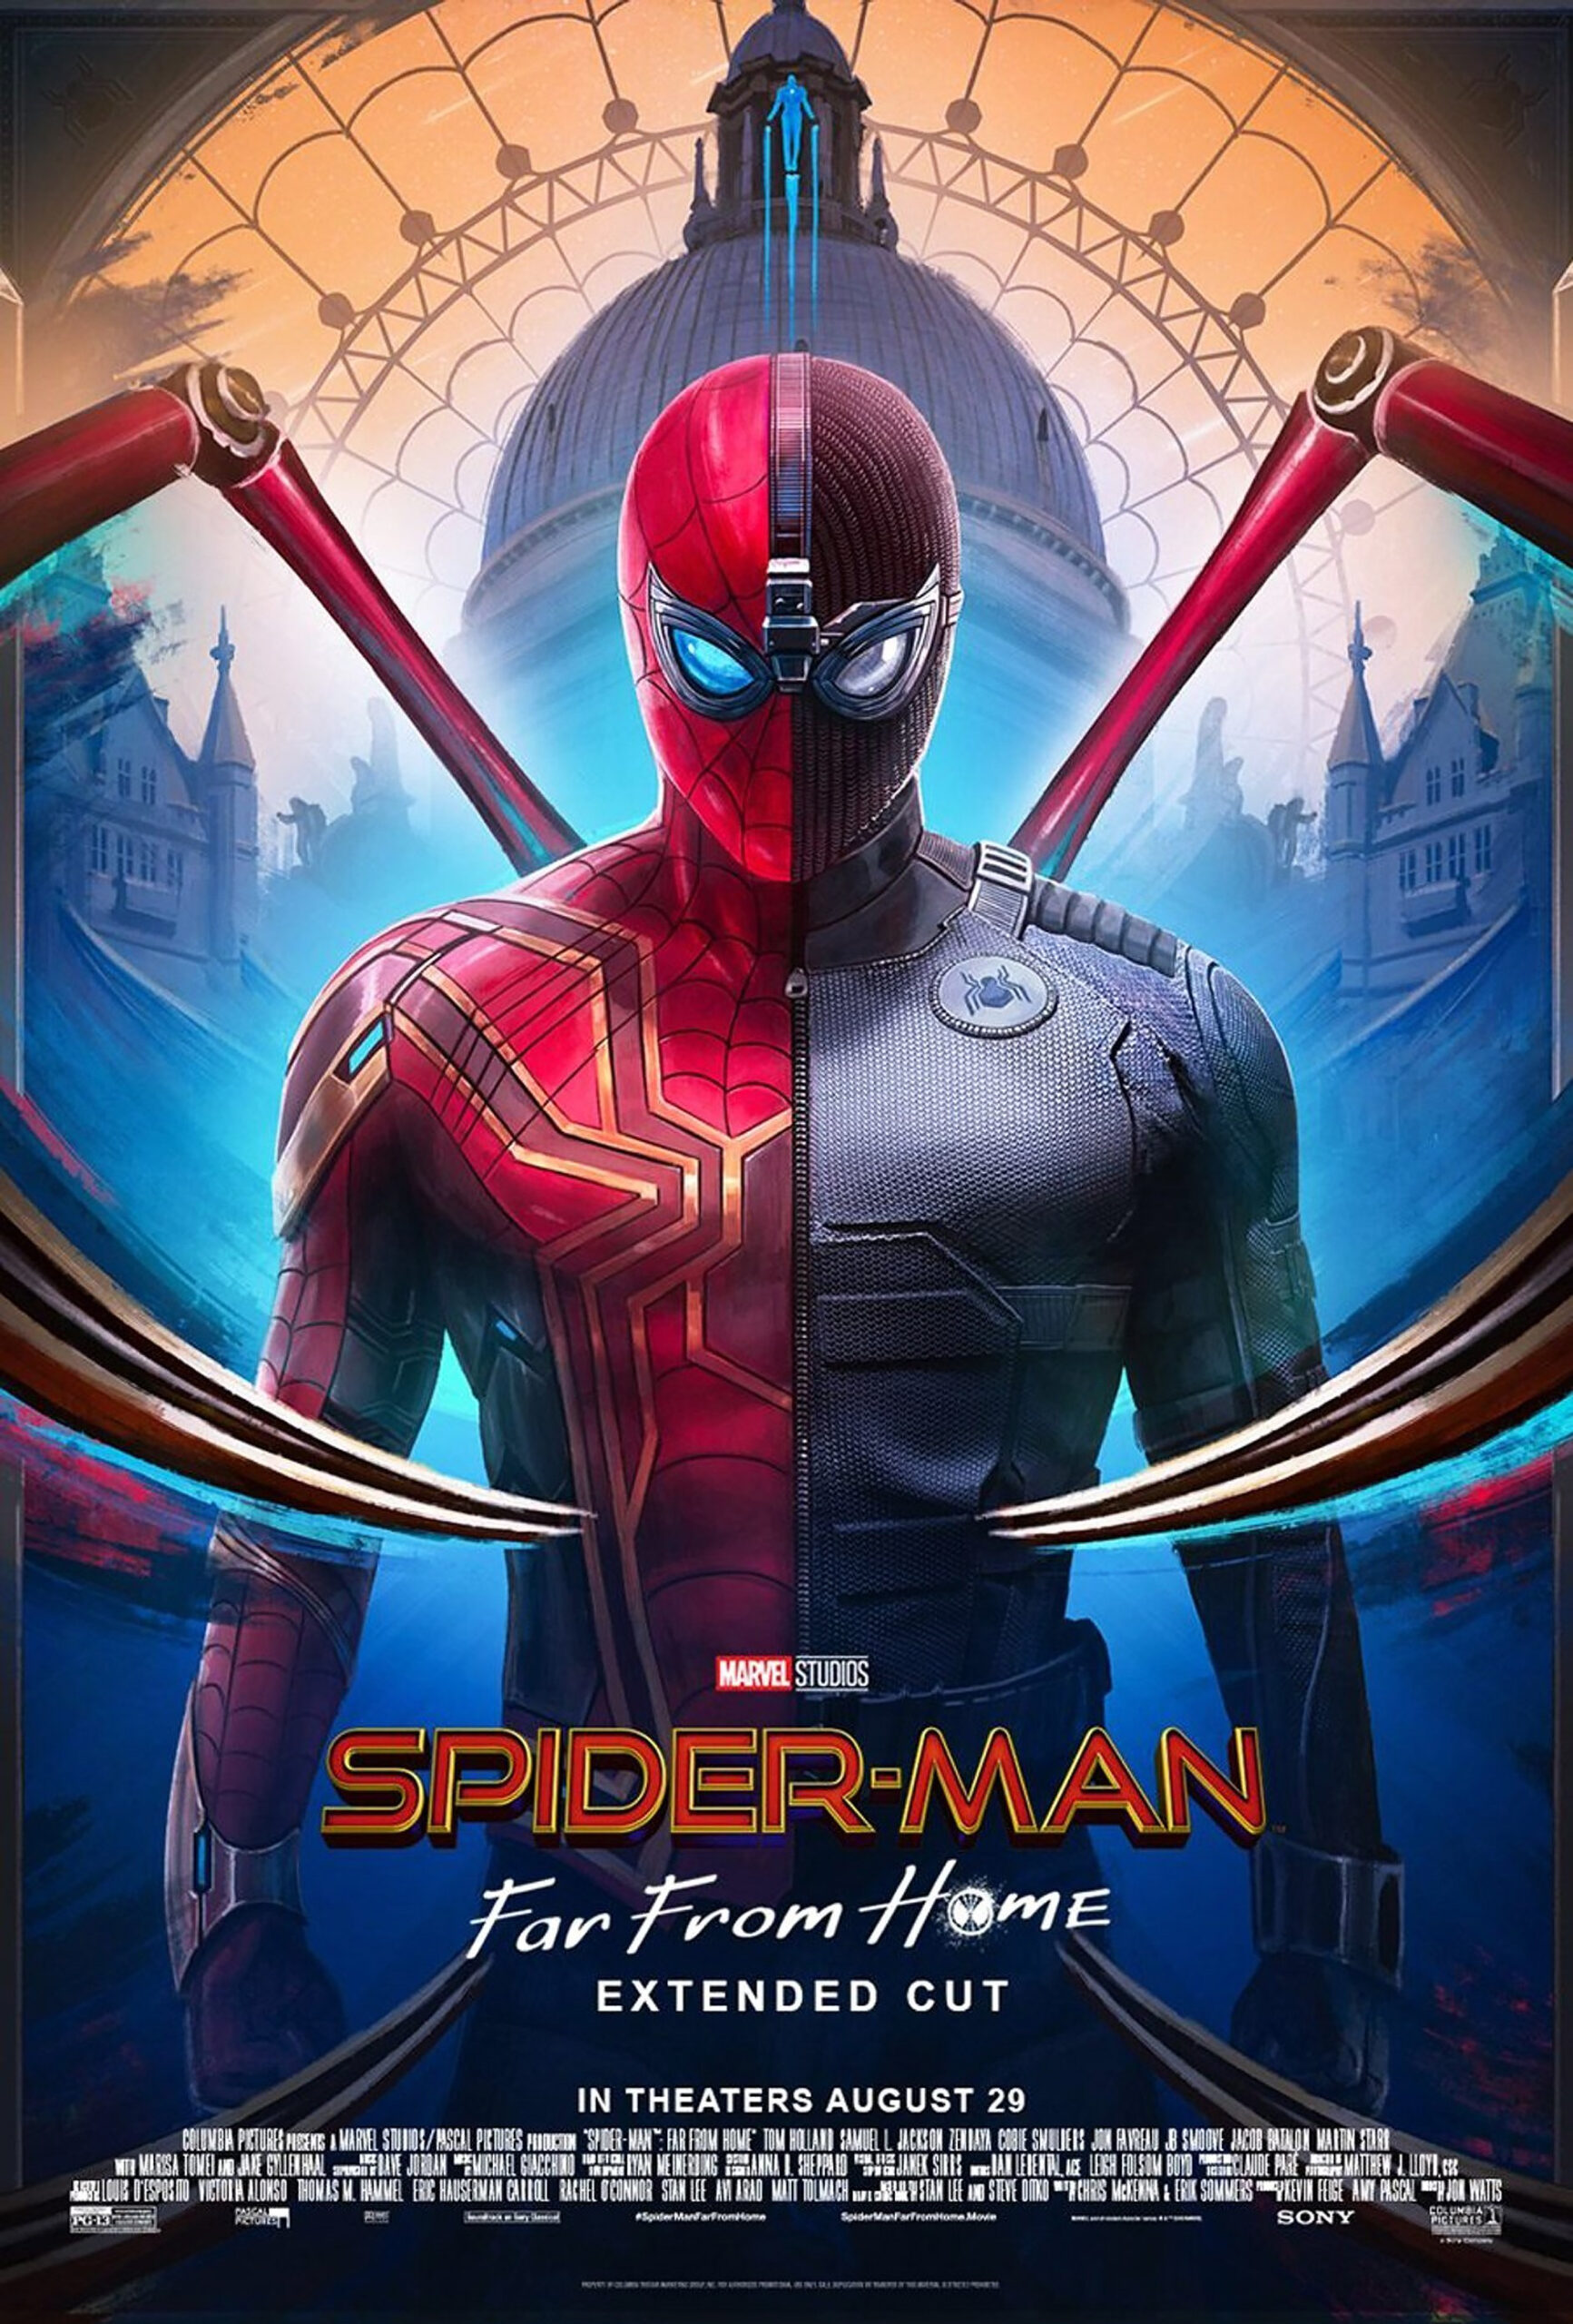 Untitled Spider-Man Sequel (2021)  ดูหนังออนไลน์ฟรี หนังใหม่ชนโรง เว็บดูหนังเต็มเรื่อง Movie123